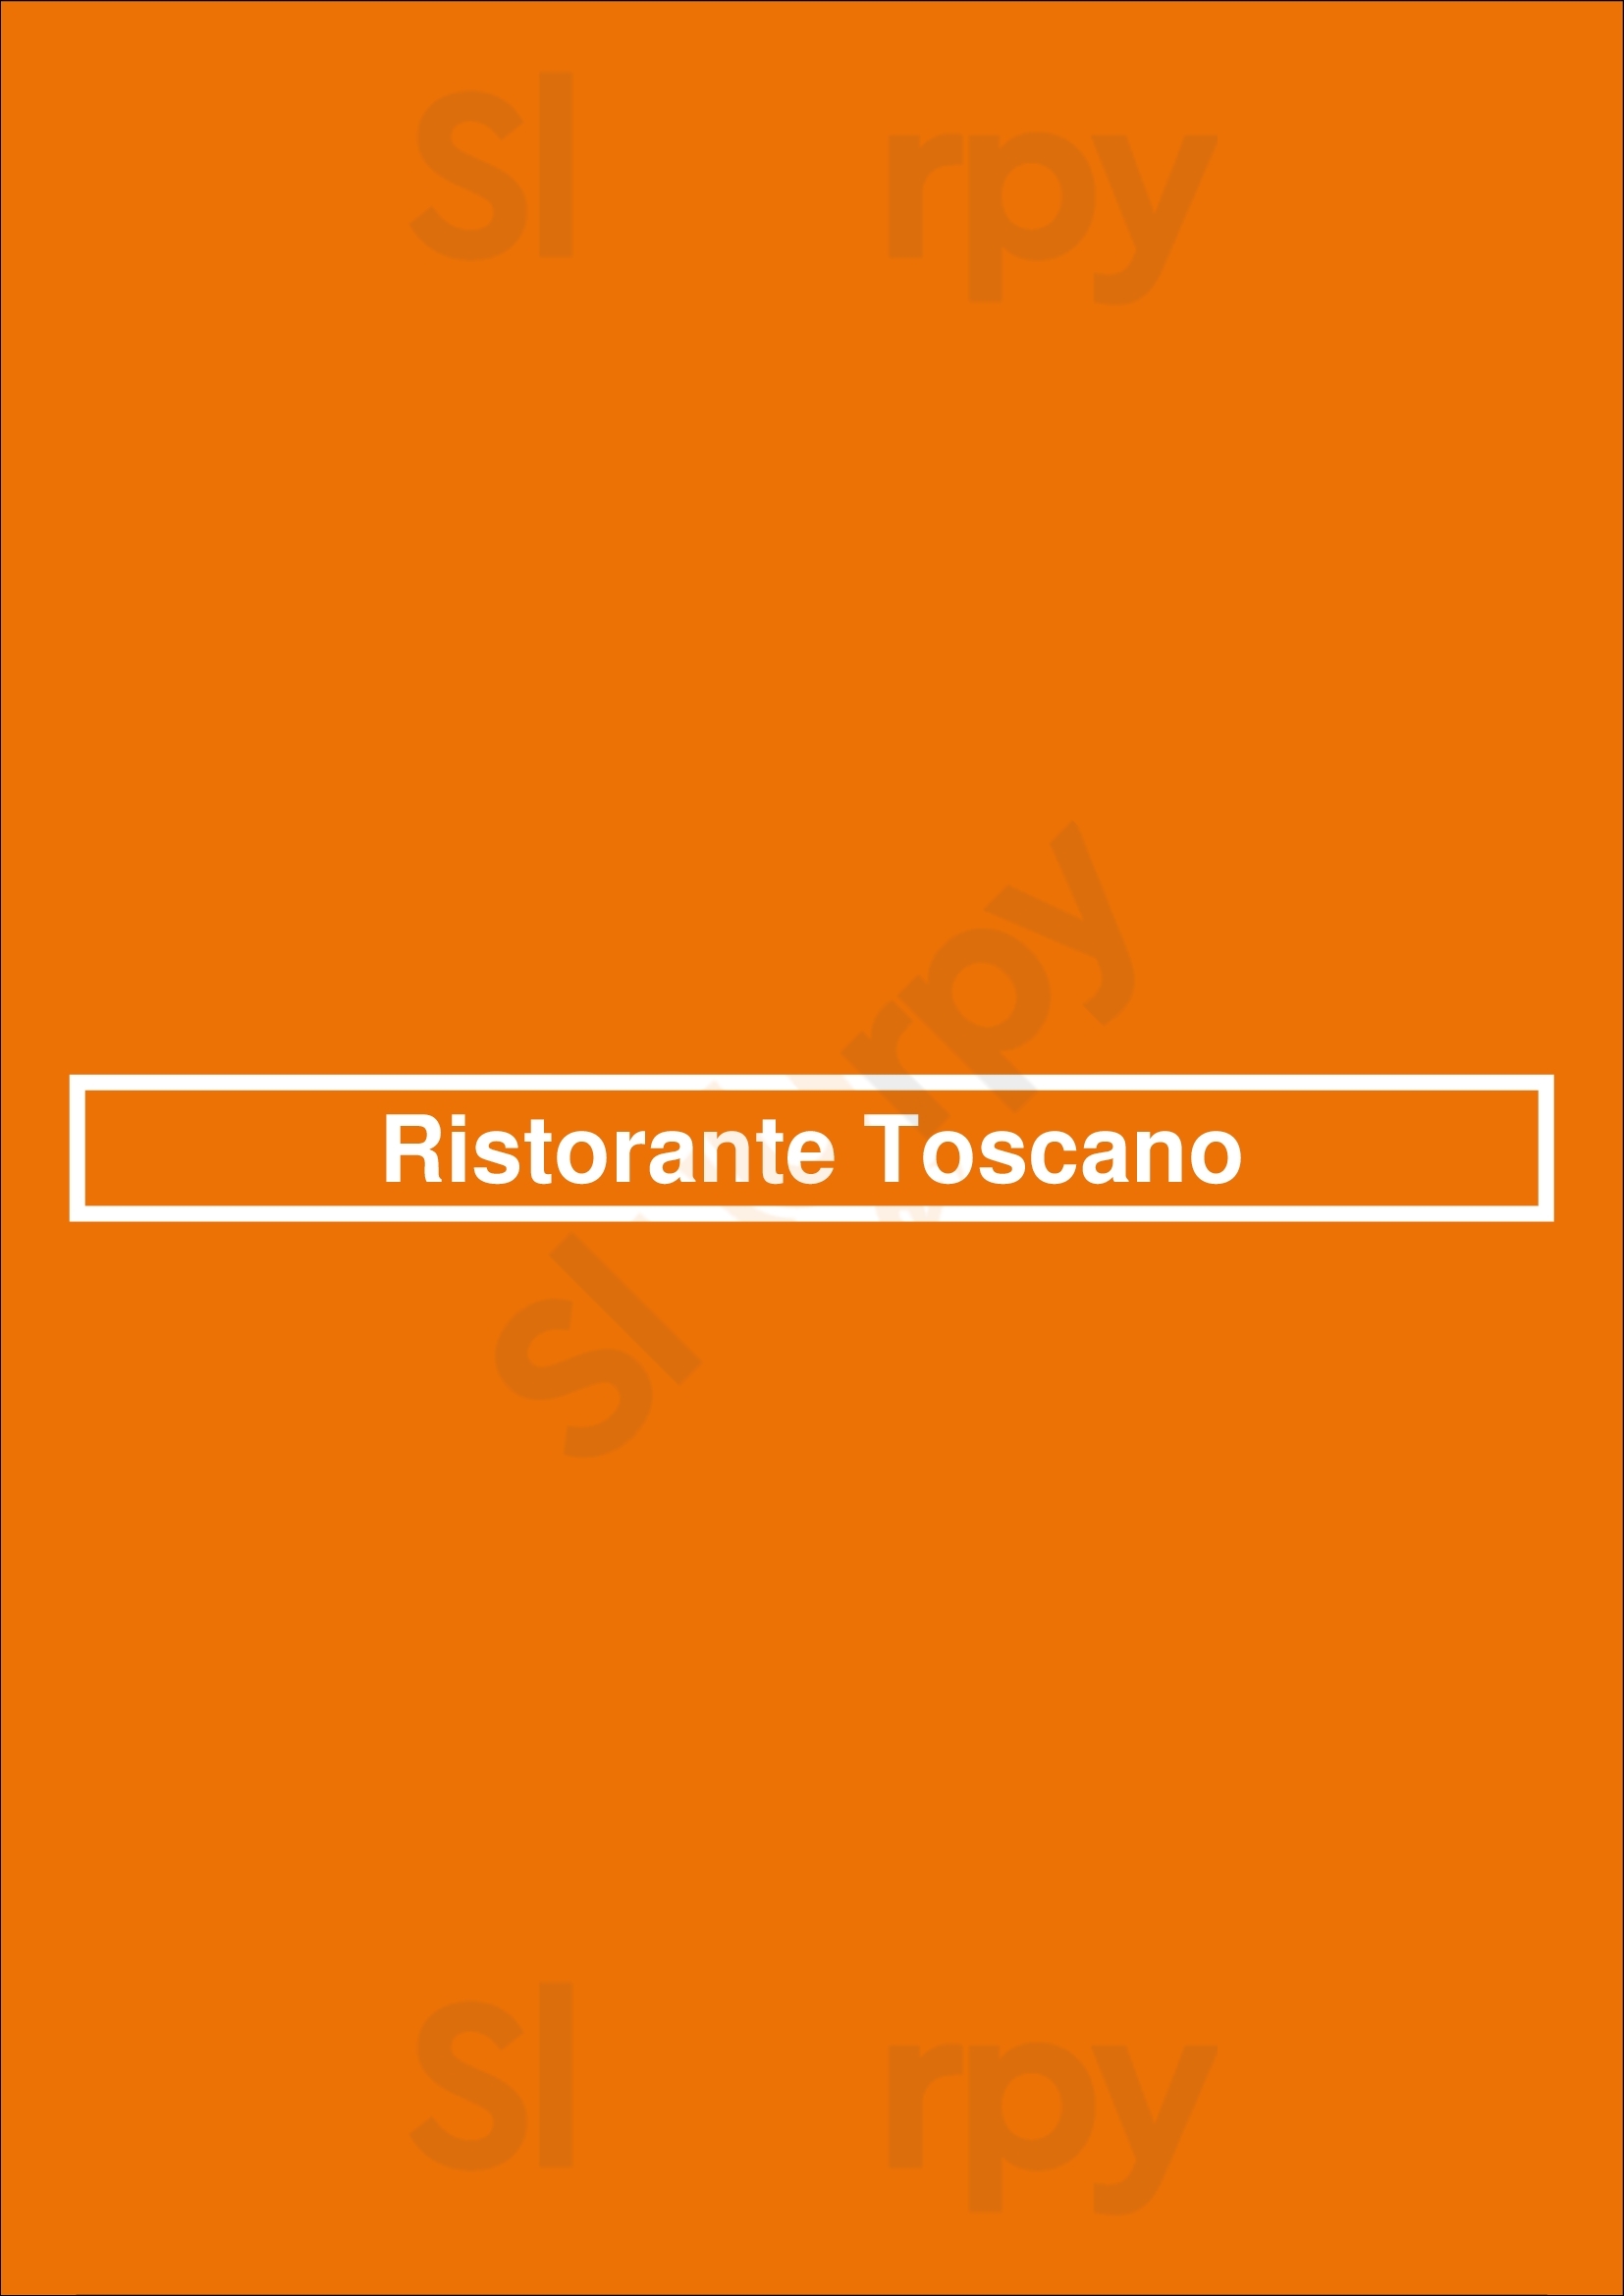 Ristorante Toscano Porto Menu - 1